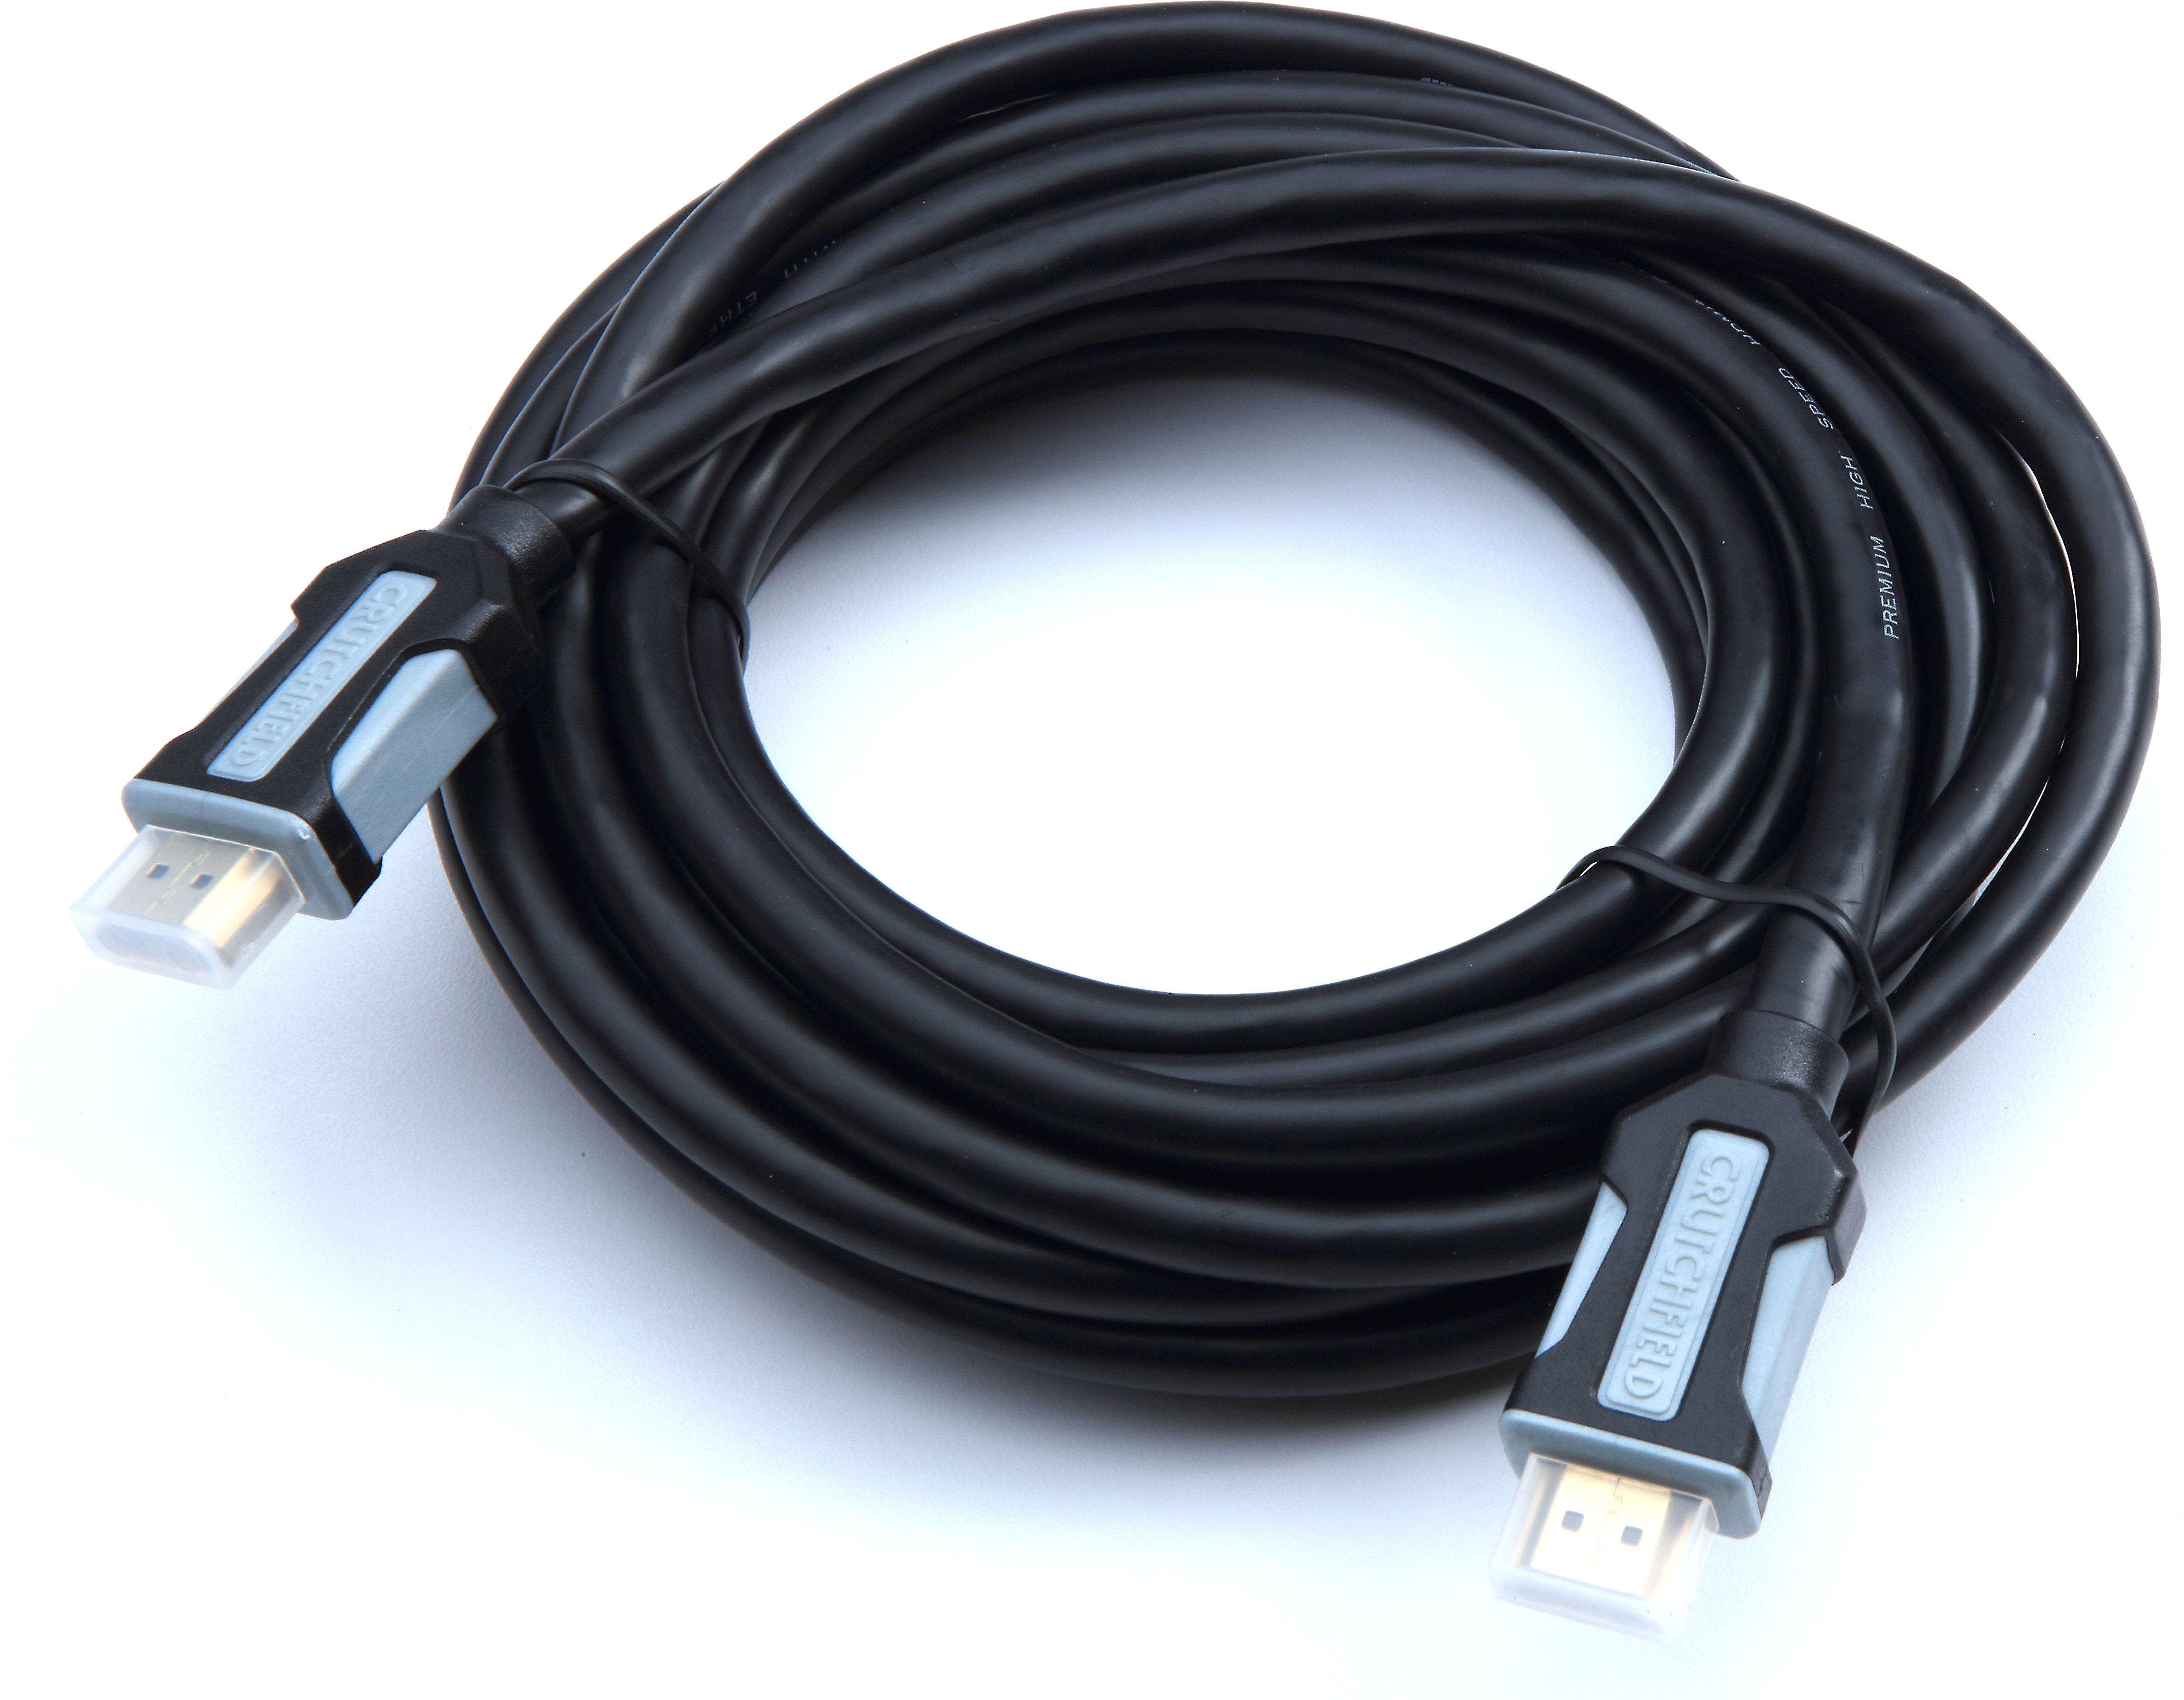 Crutchfield Premium Hdmi Cable 15 Feet Premium High Speed Hdmi Cable With Ethernet At Crutchfield